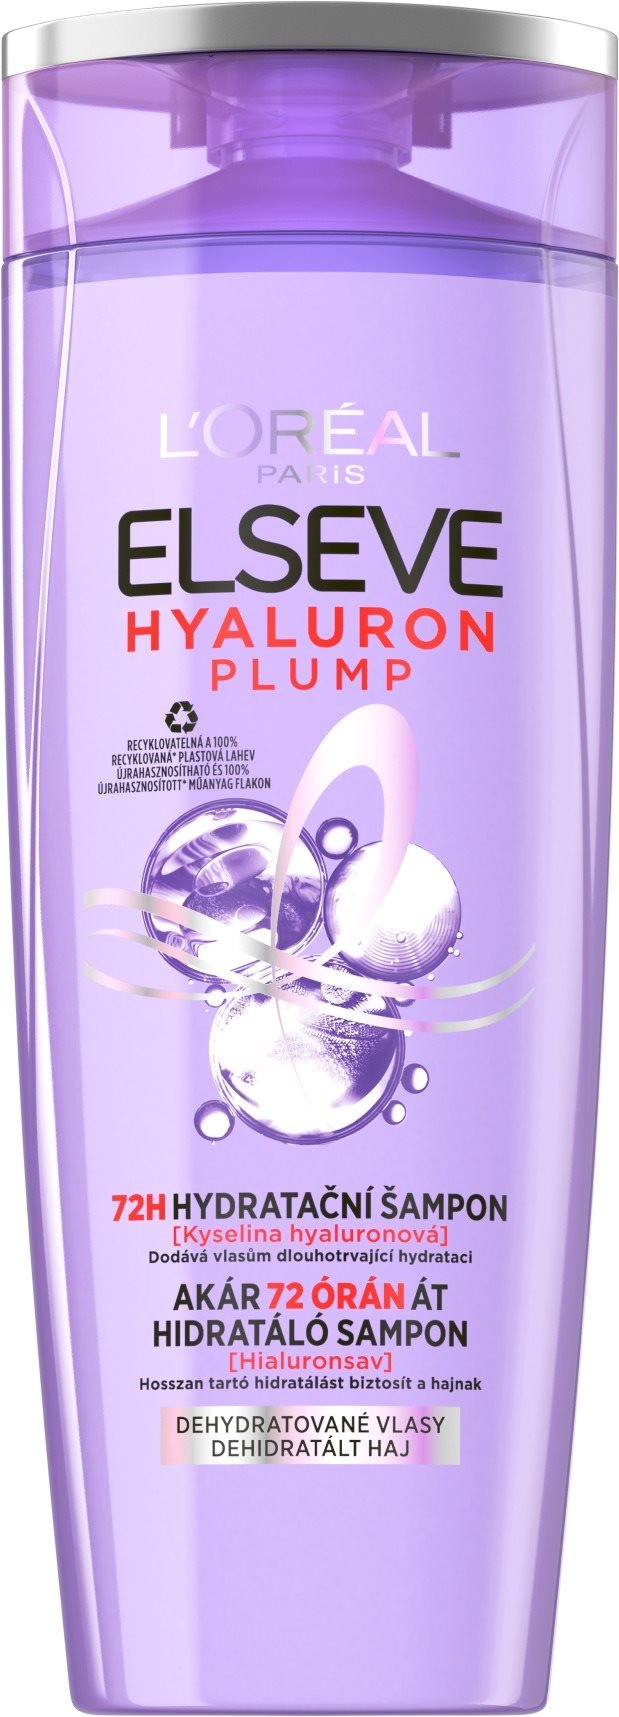 ĽORÉAL PARIS Elseve Hyaluron Plump 72H hidratáló sampon hialuronsavval 400 ml